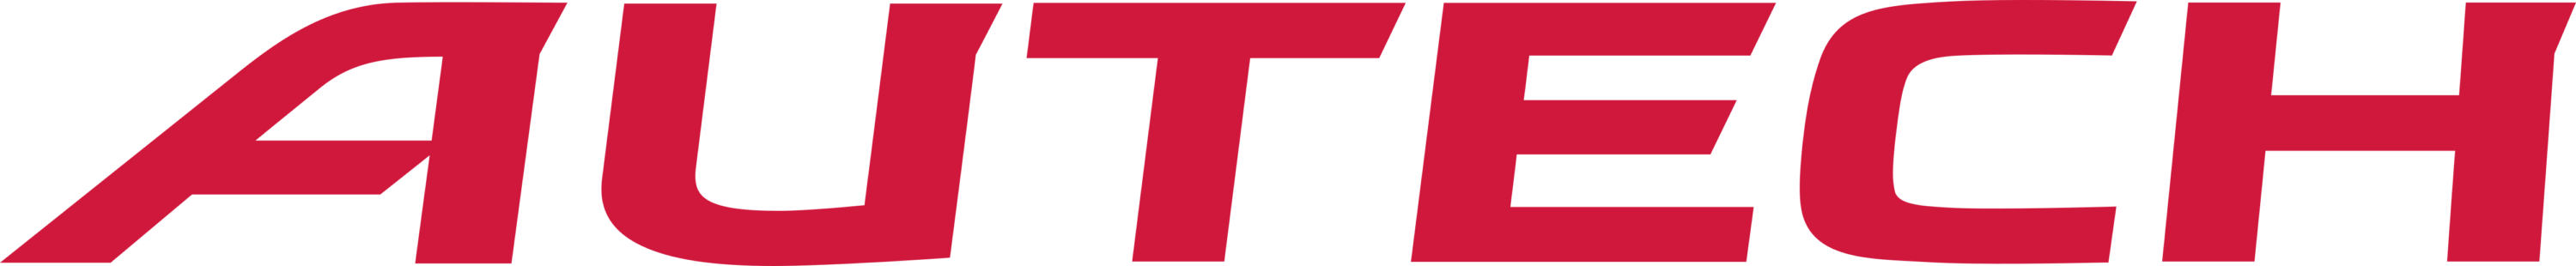 Autech Logo